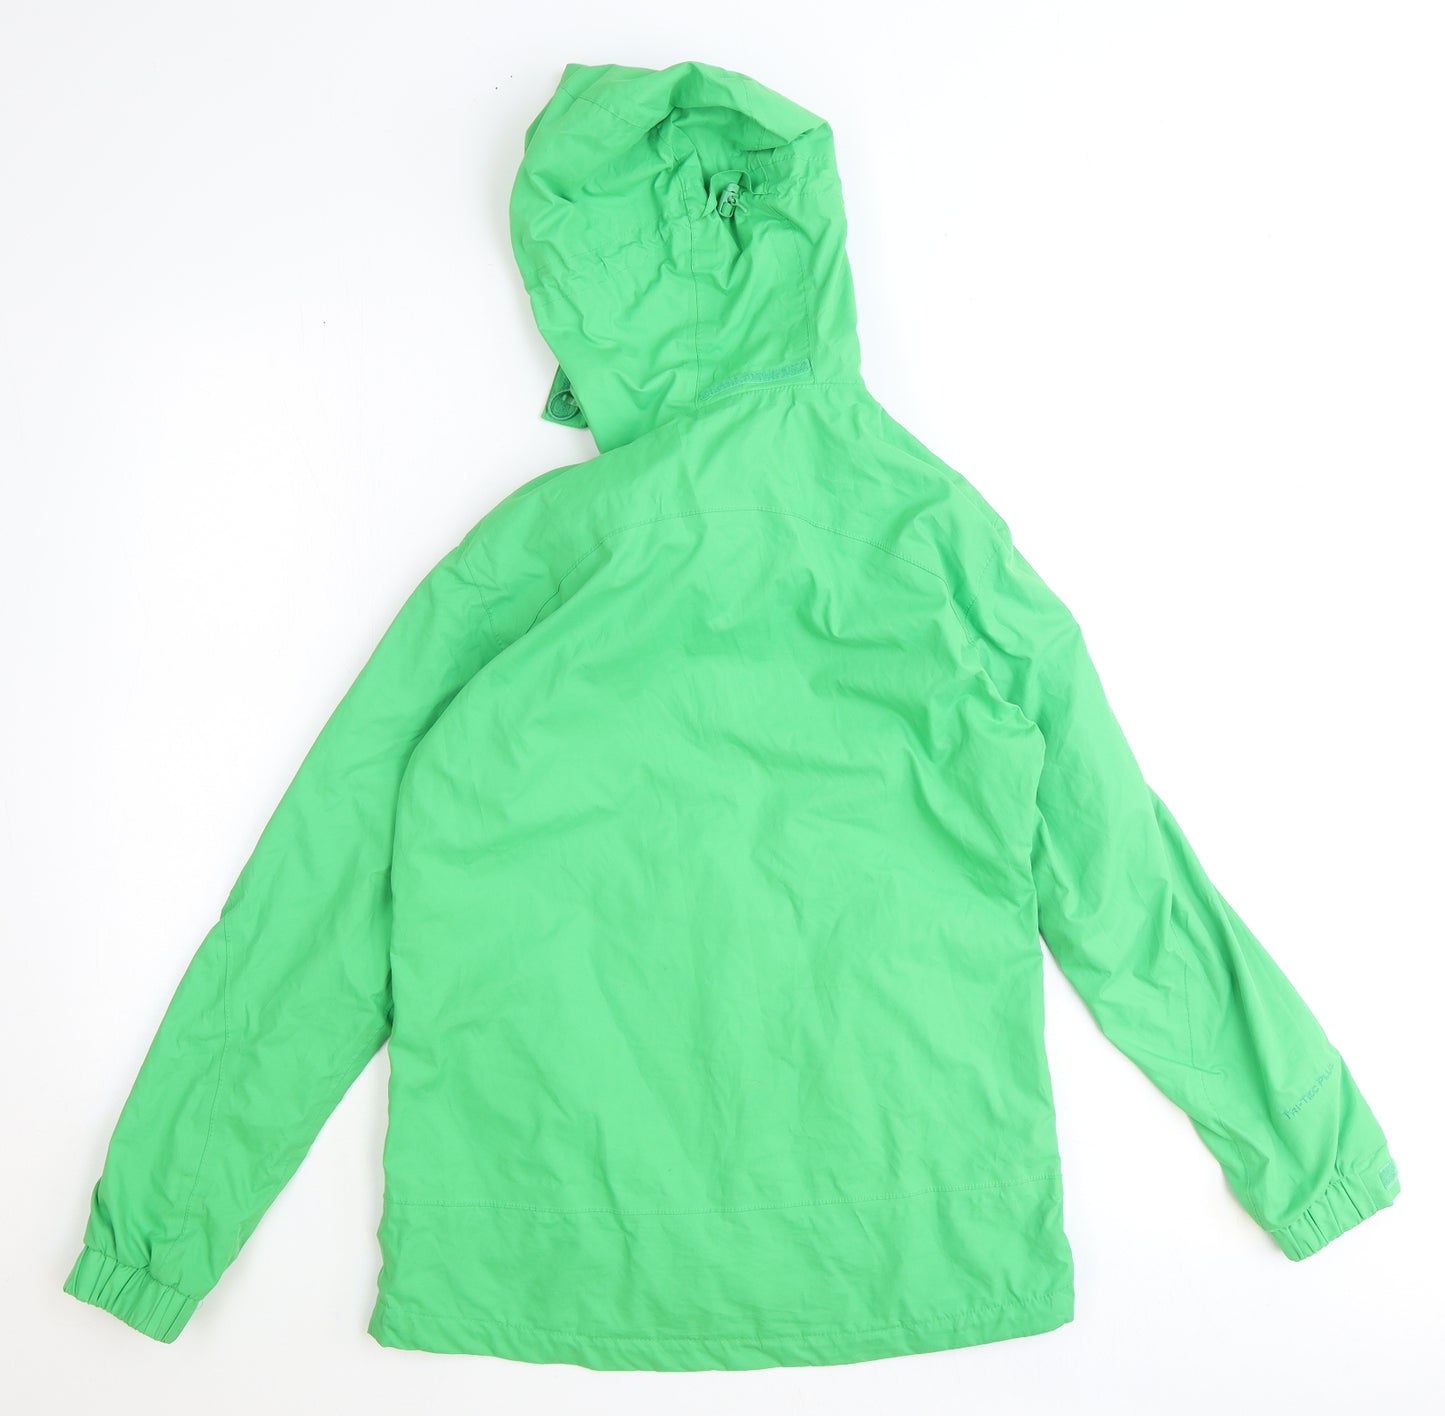 Peter Storm Womens Green Jacket Size 10 Zip - Hooded